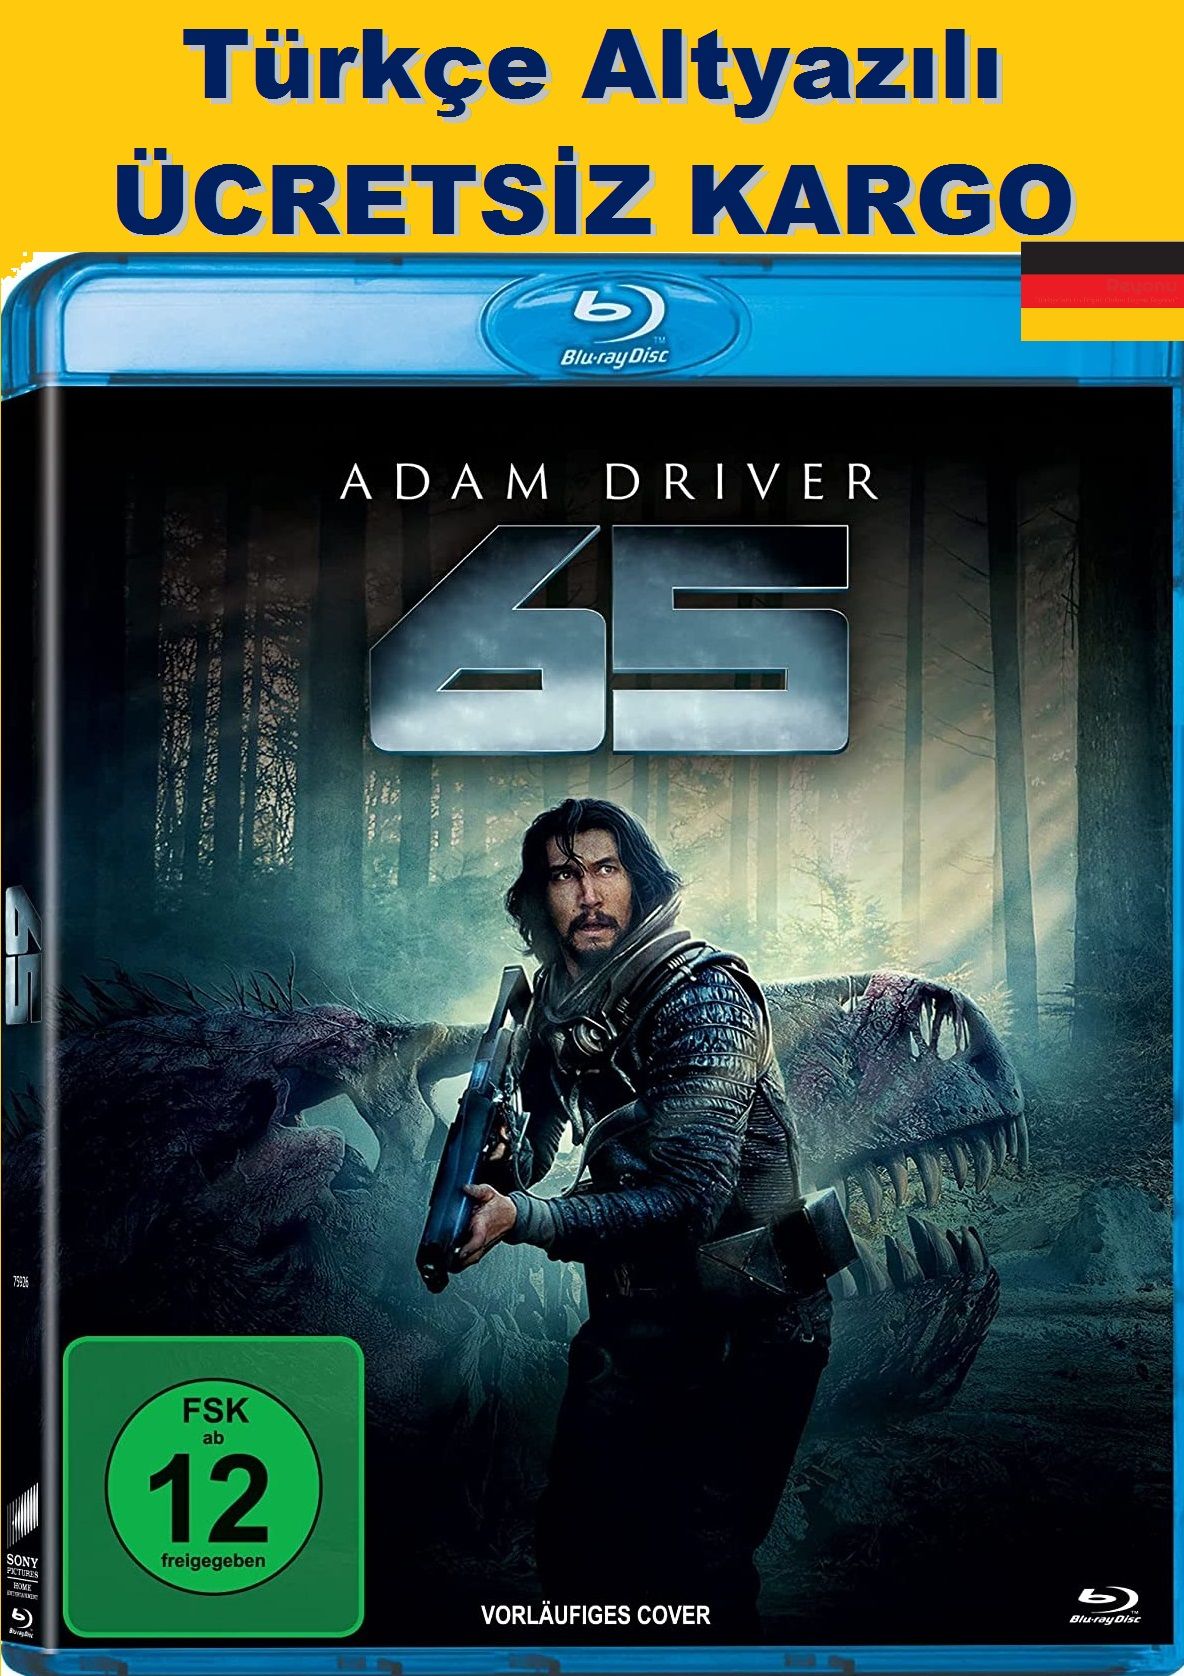 65 Blu-Ray